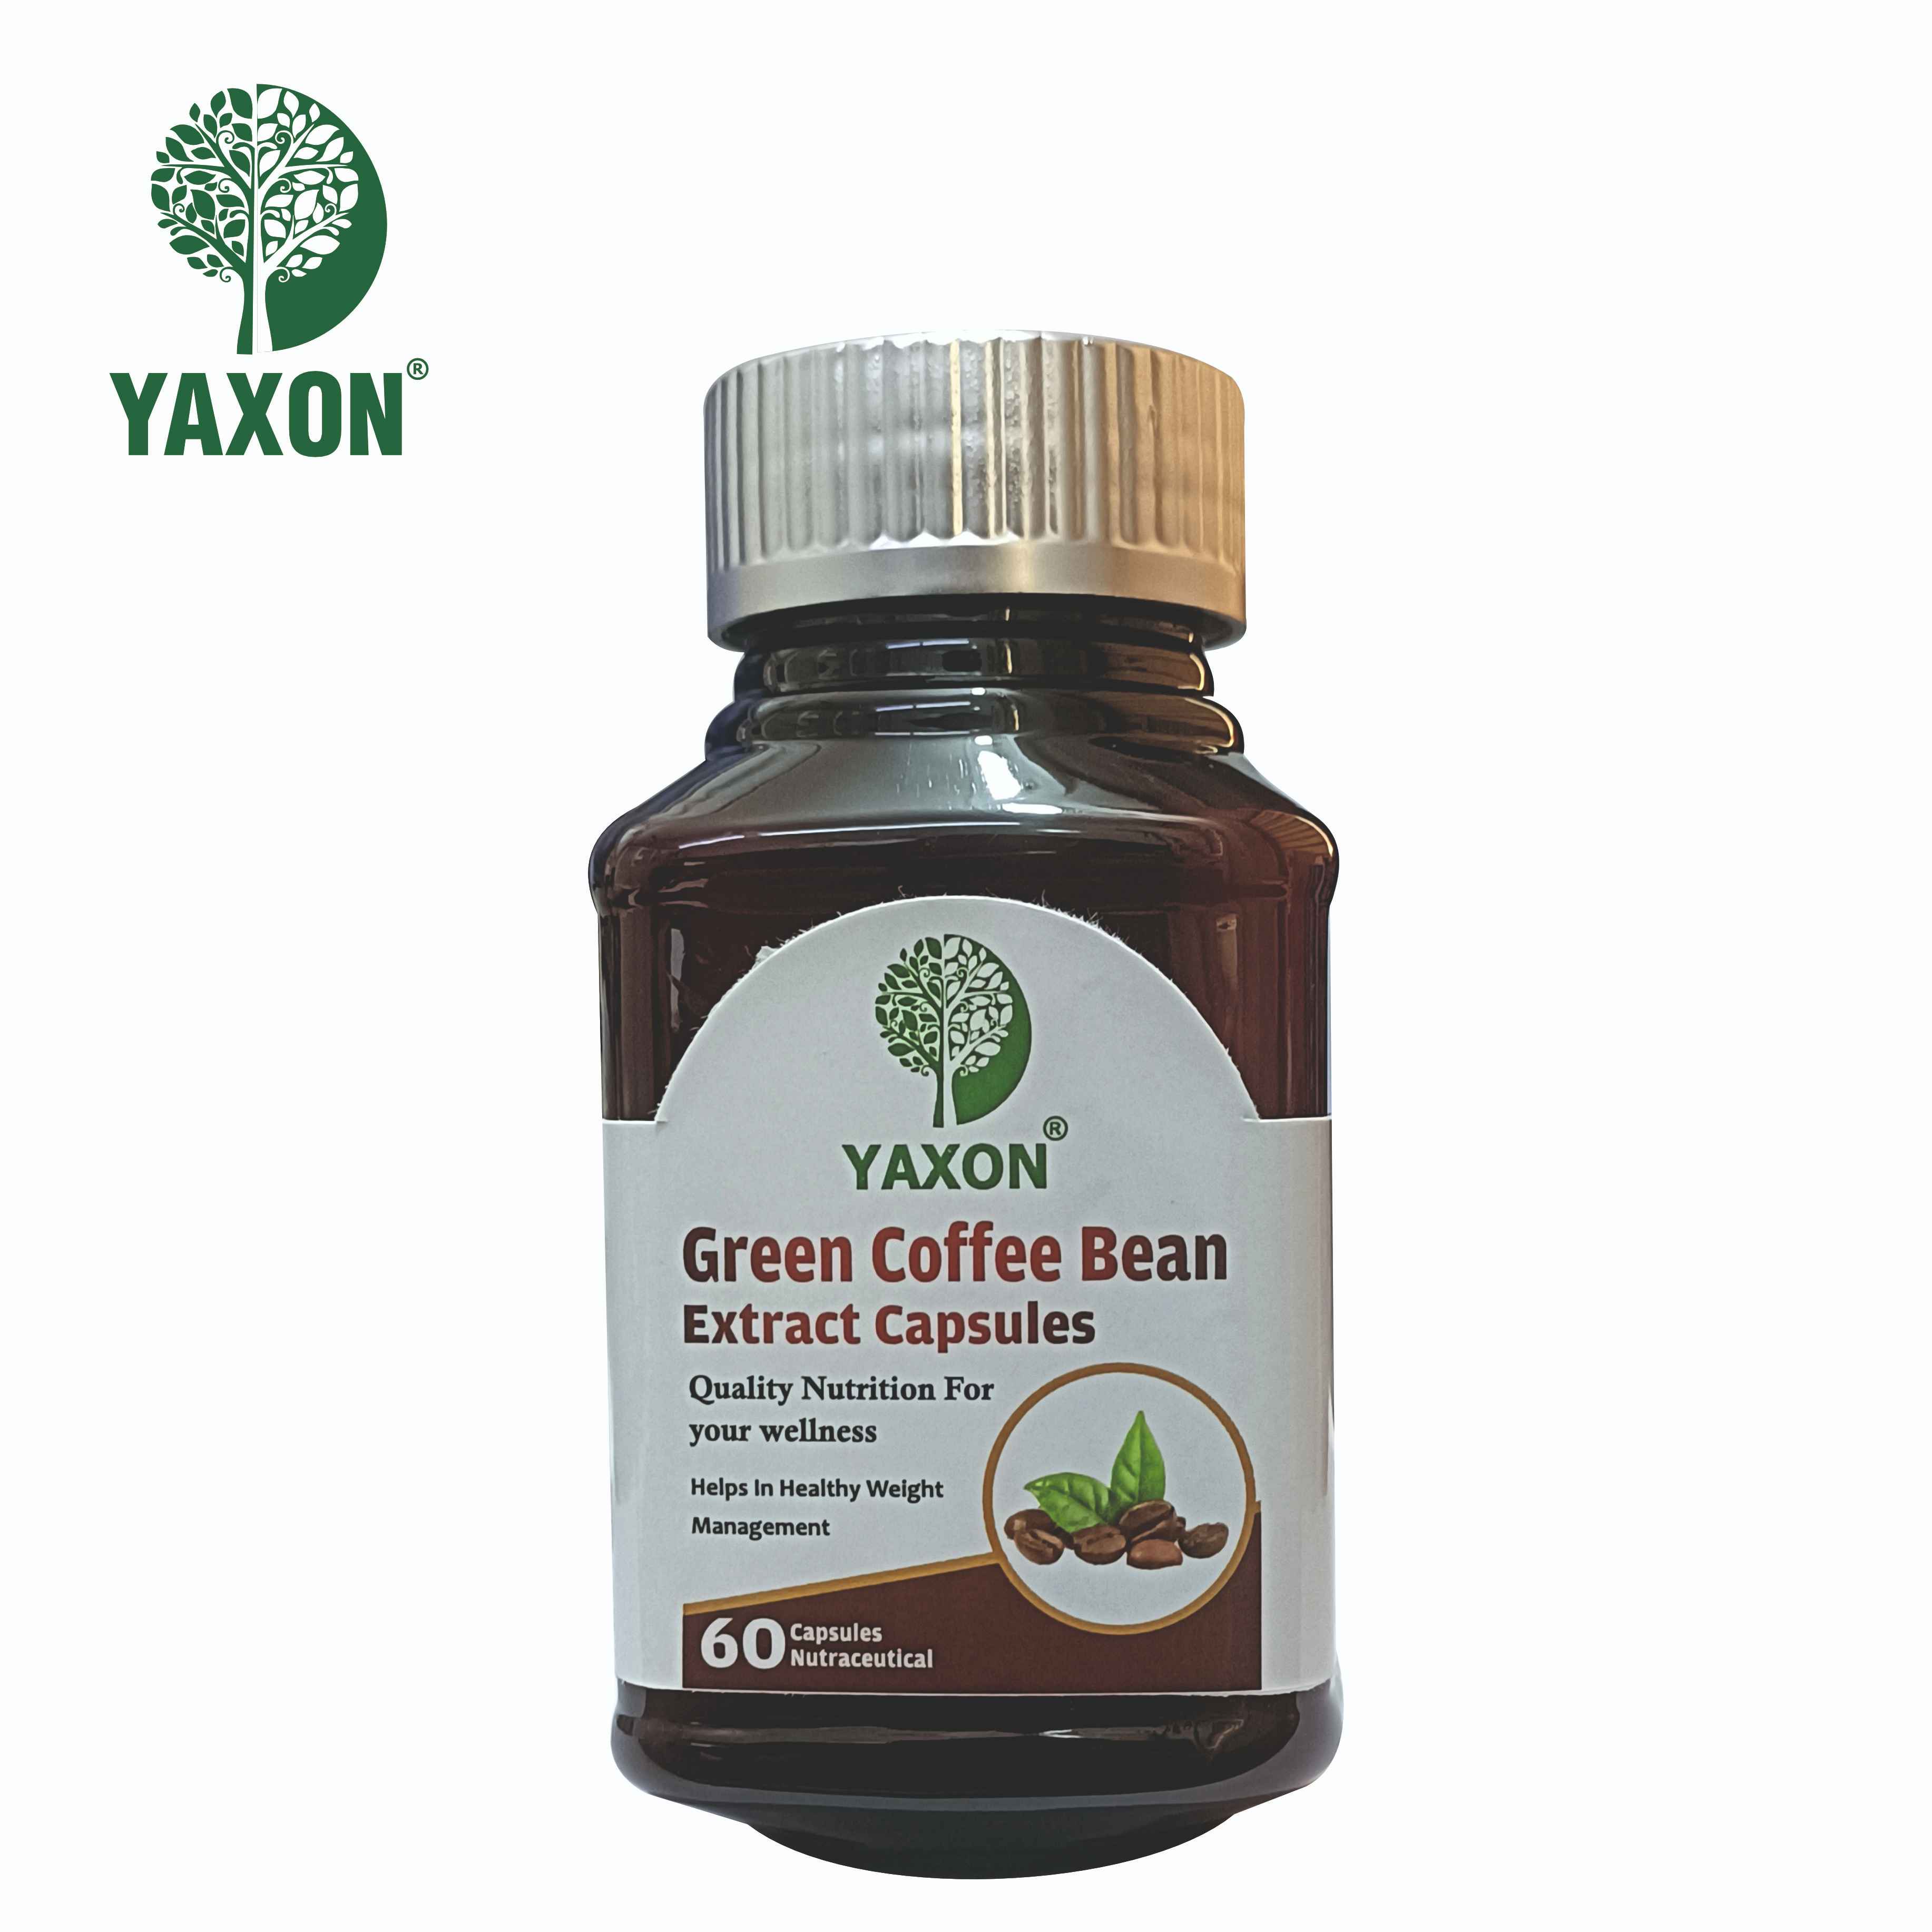 GREEN COFFEE BEAN CAPSULES